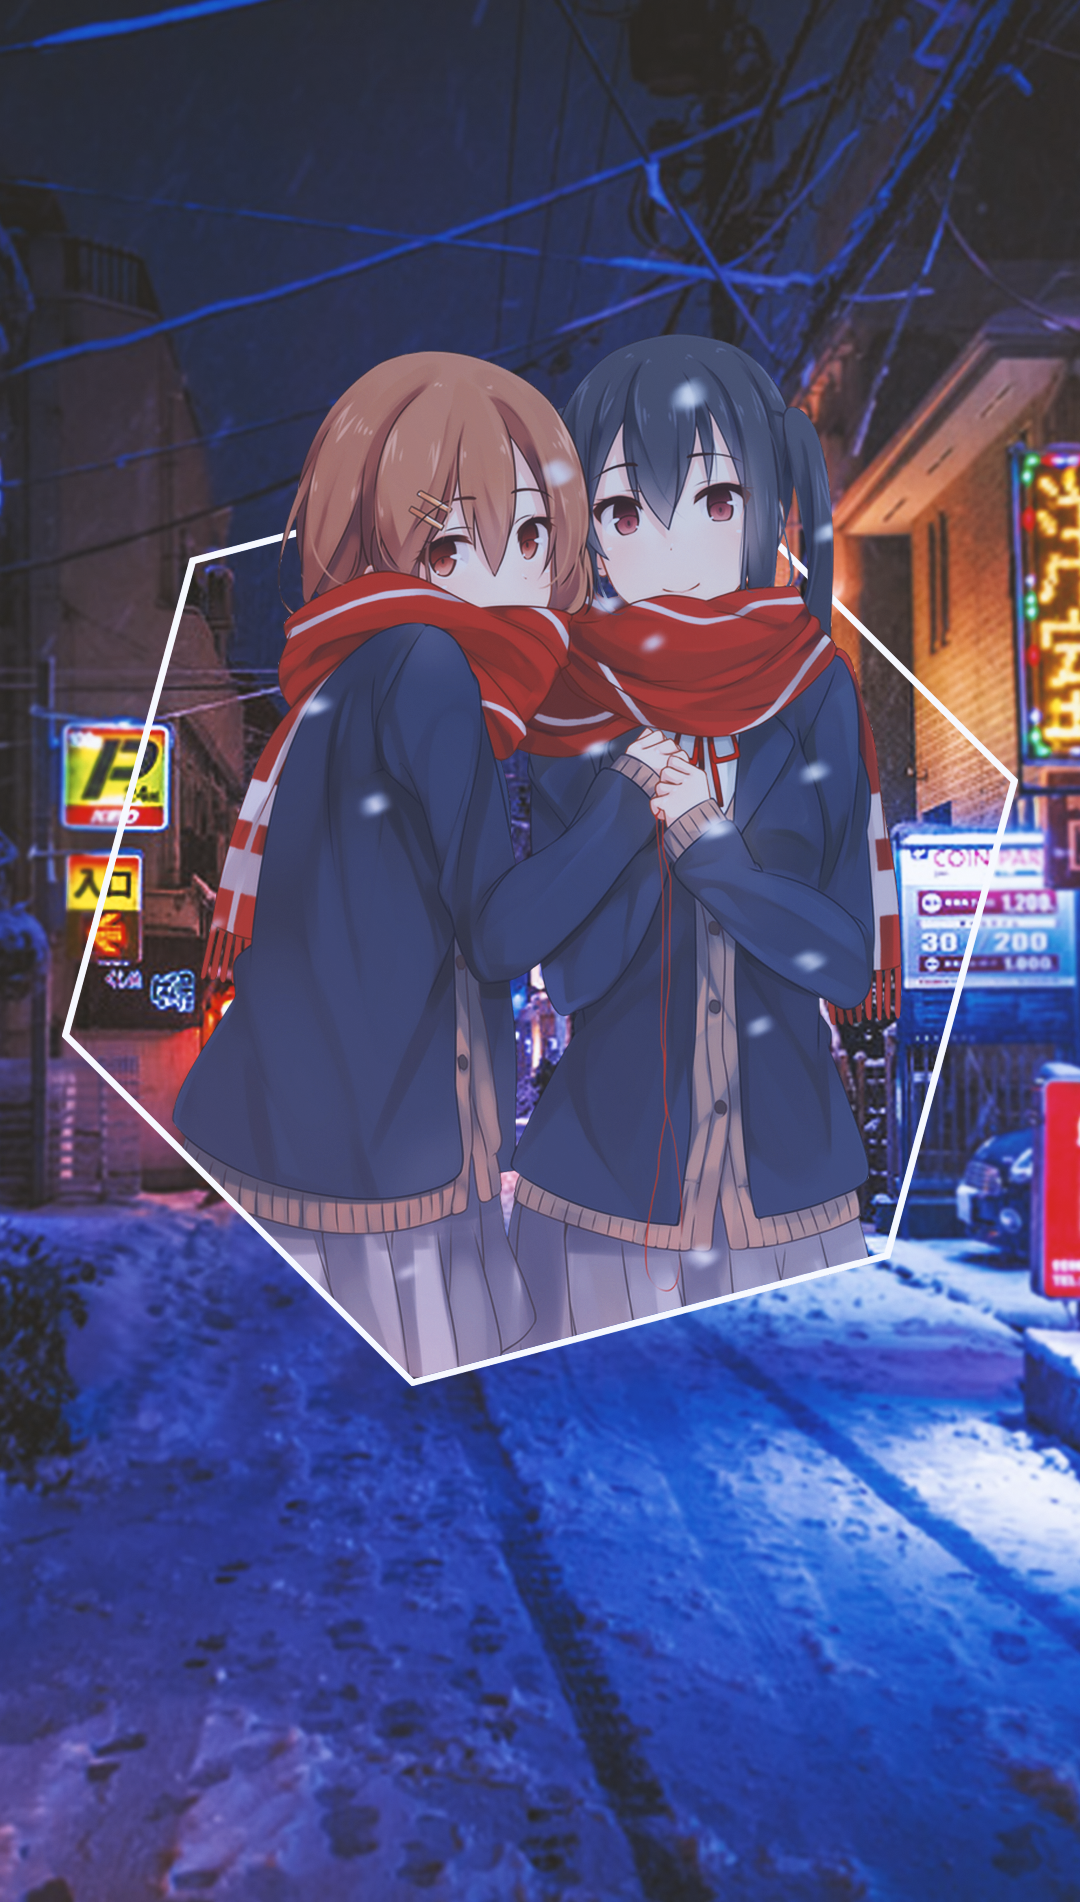 Anime 1080x1902 anime girls anime picture-in-picture K-ON! Hirasawa Yui Nakano Azusa winter snow scarf